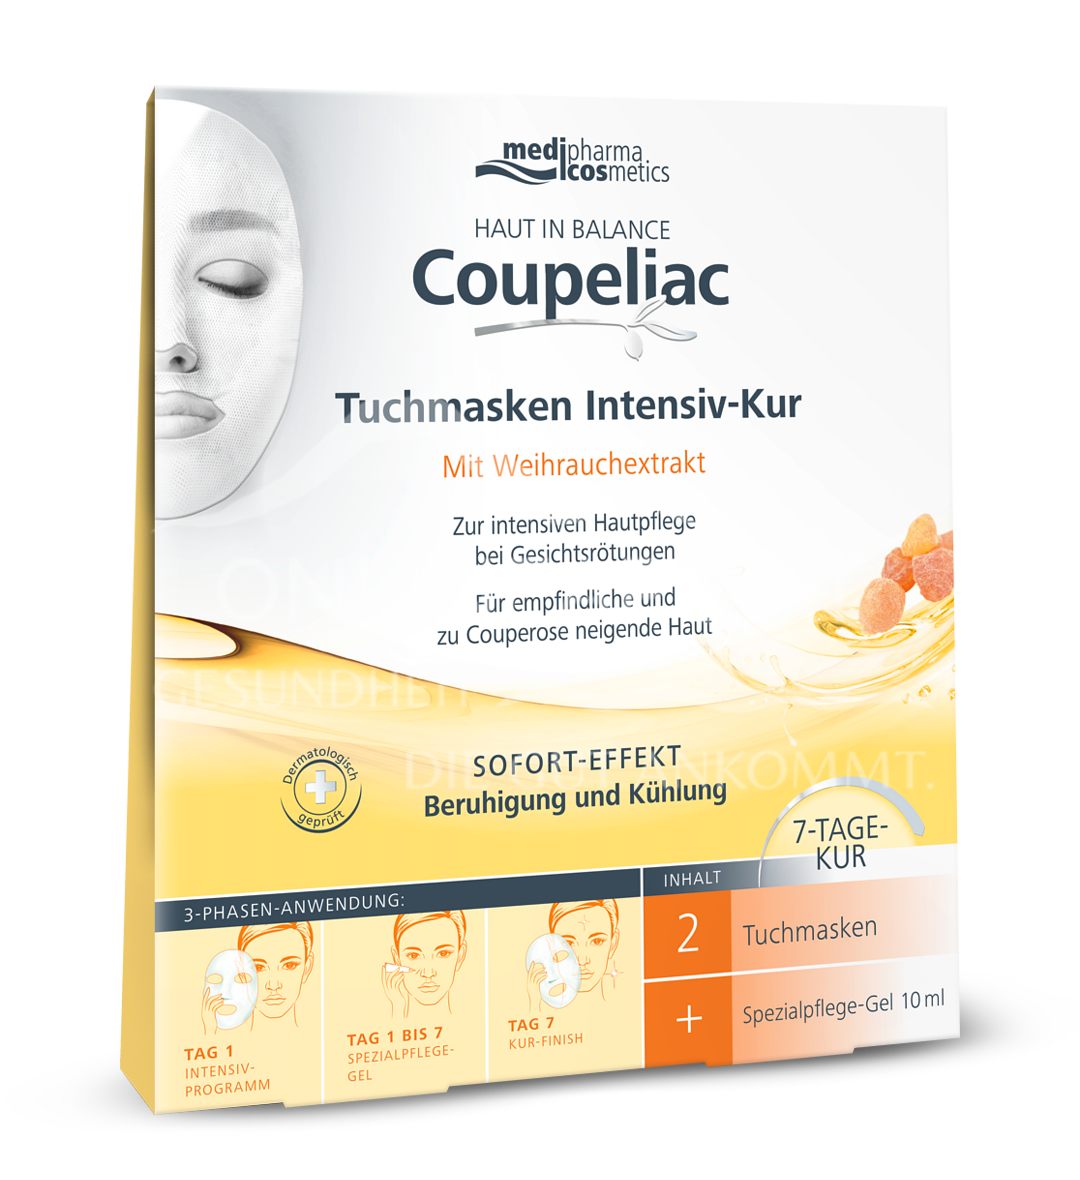 medipharma cosmetics Haut in Balance Coupeliac Tuchmasken Intensiv-Kur